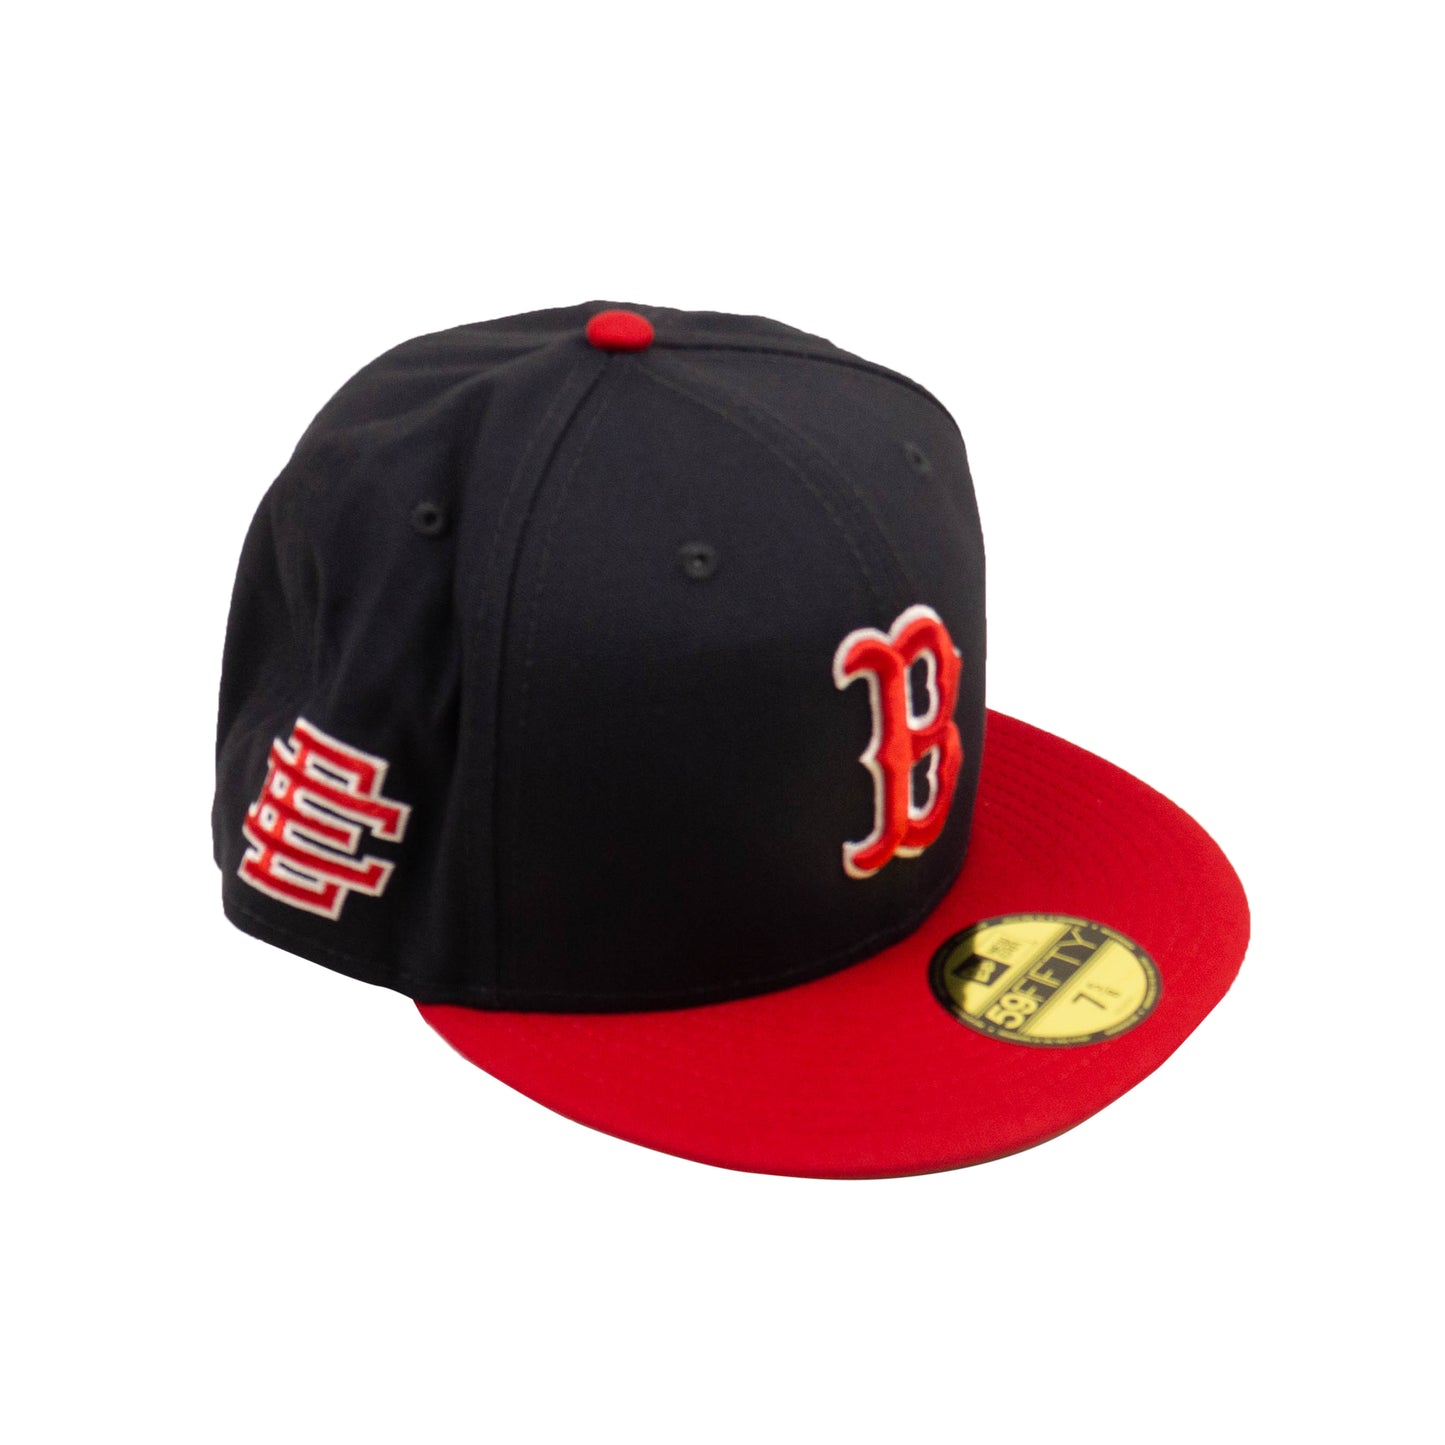 New Era Boston Red Sox Baseball Cap Hat - Navy Blue